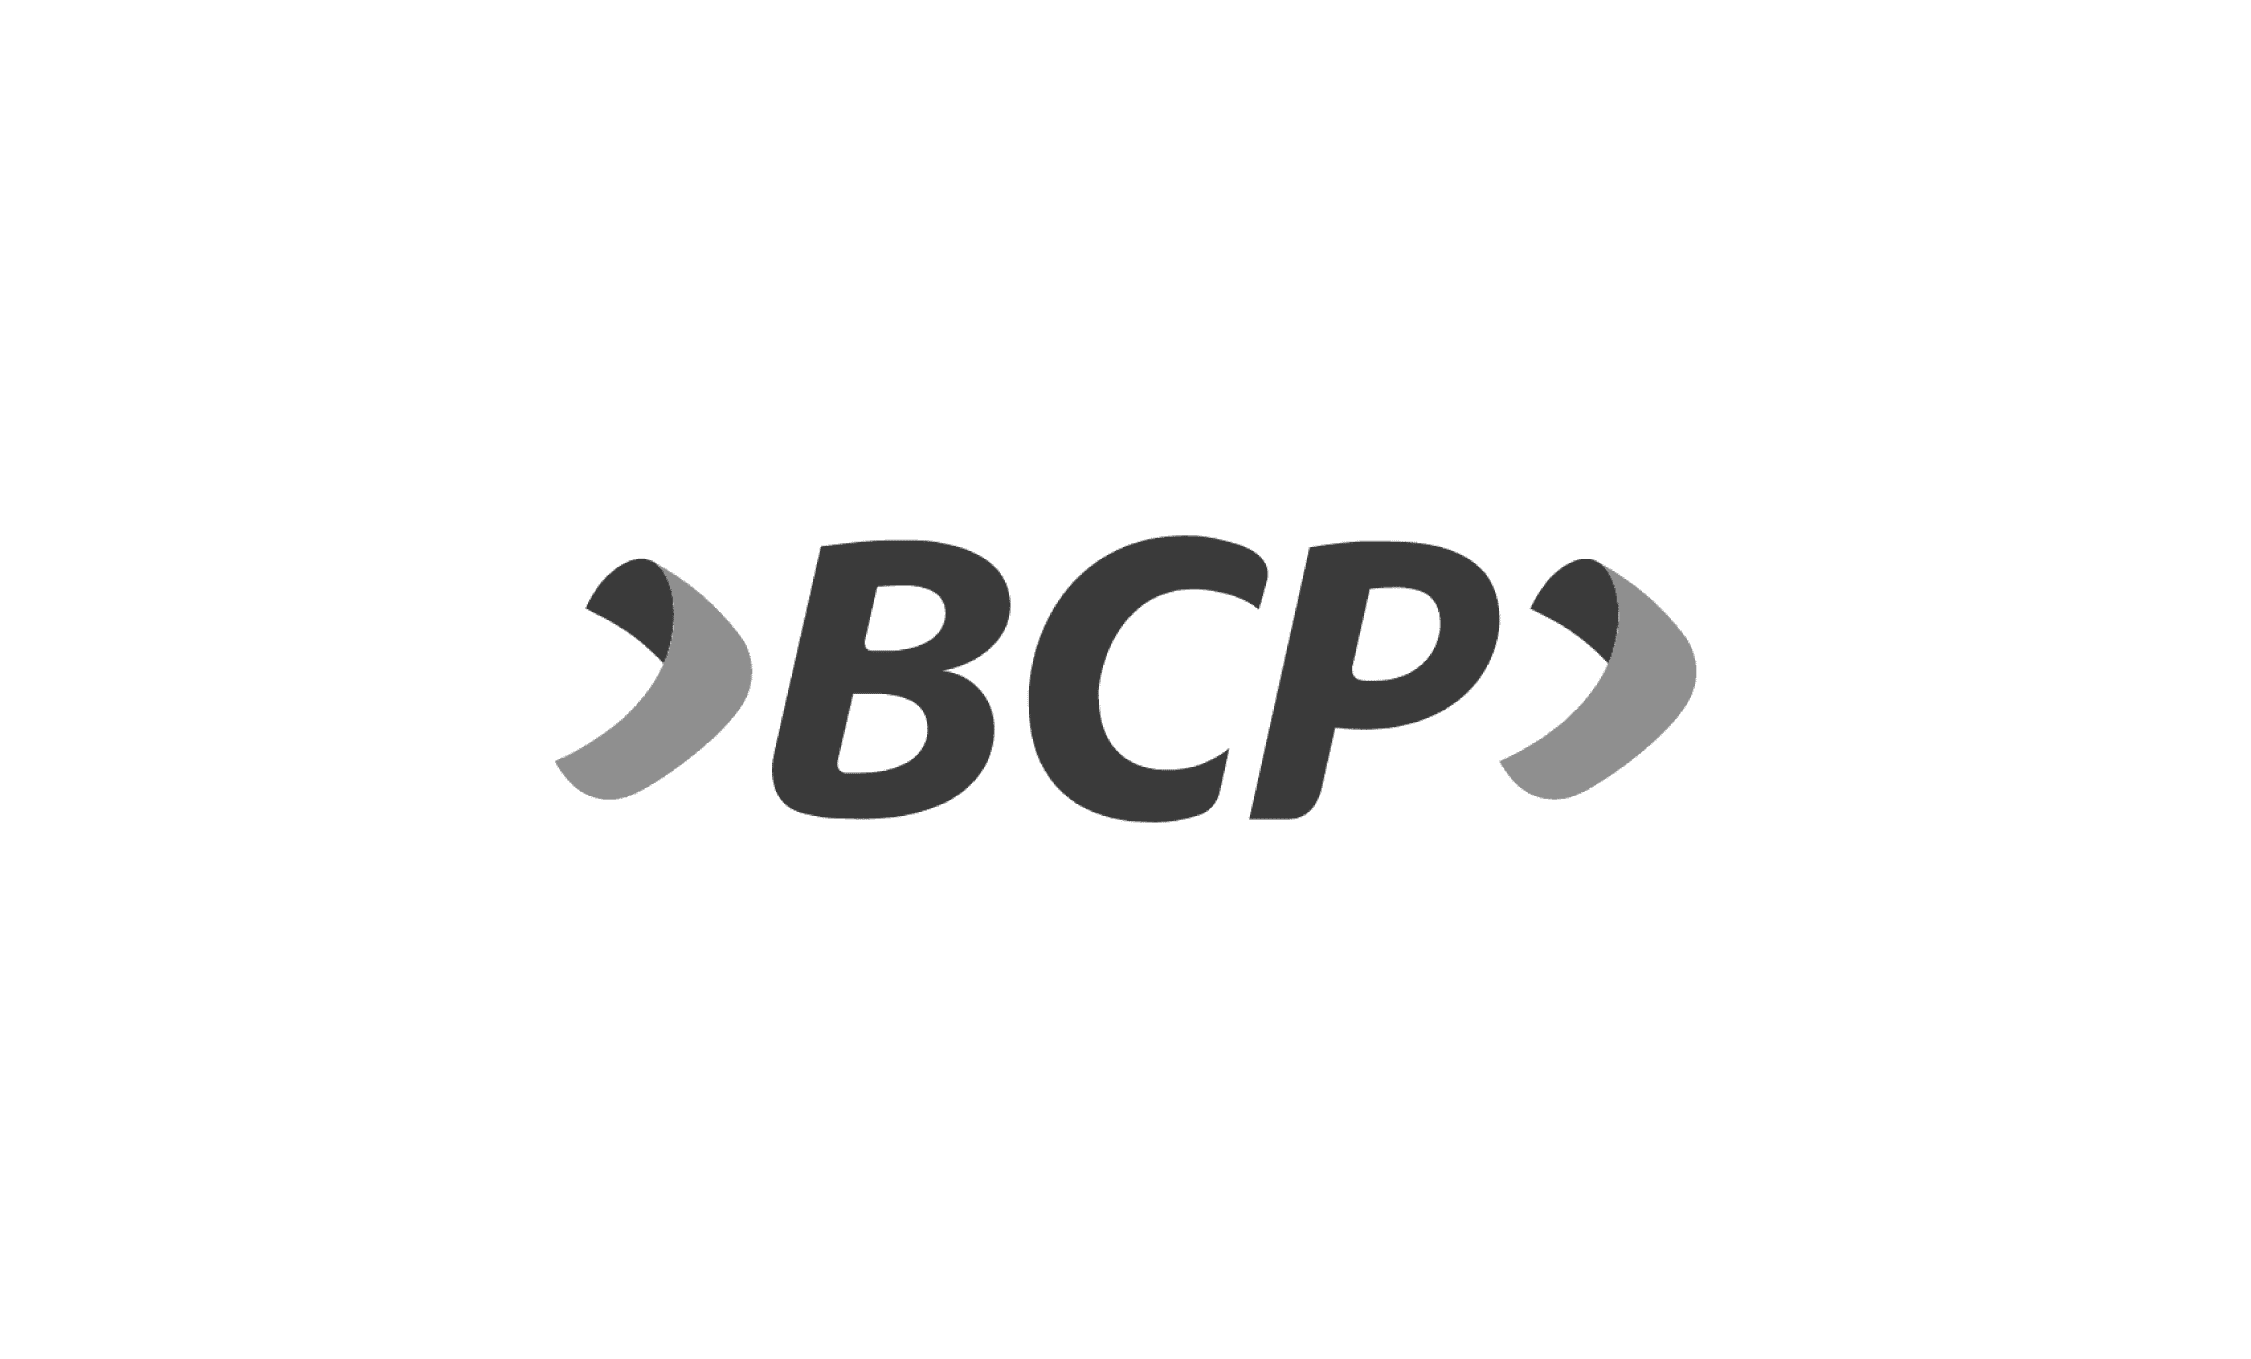 BCP staff